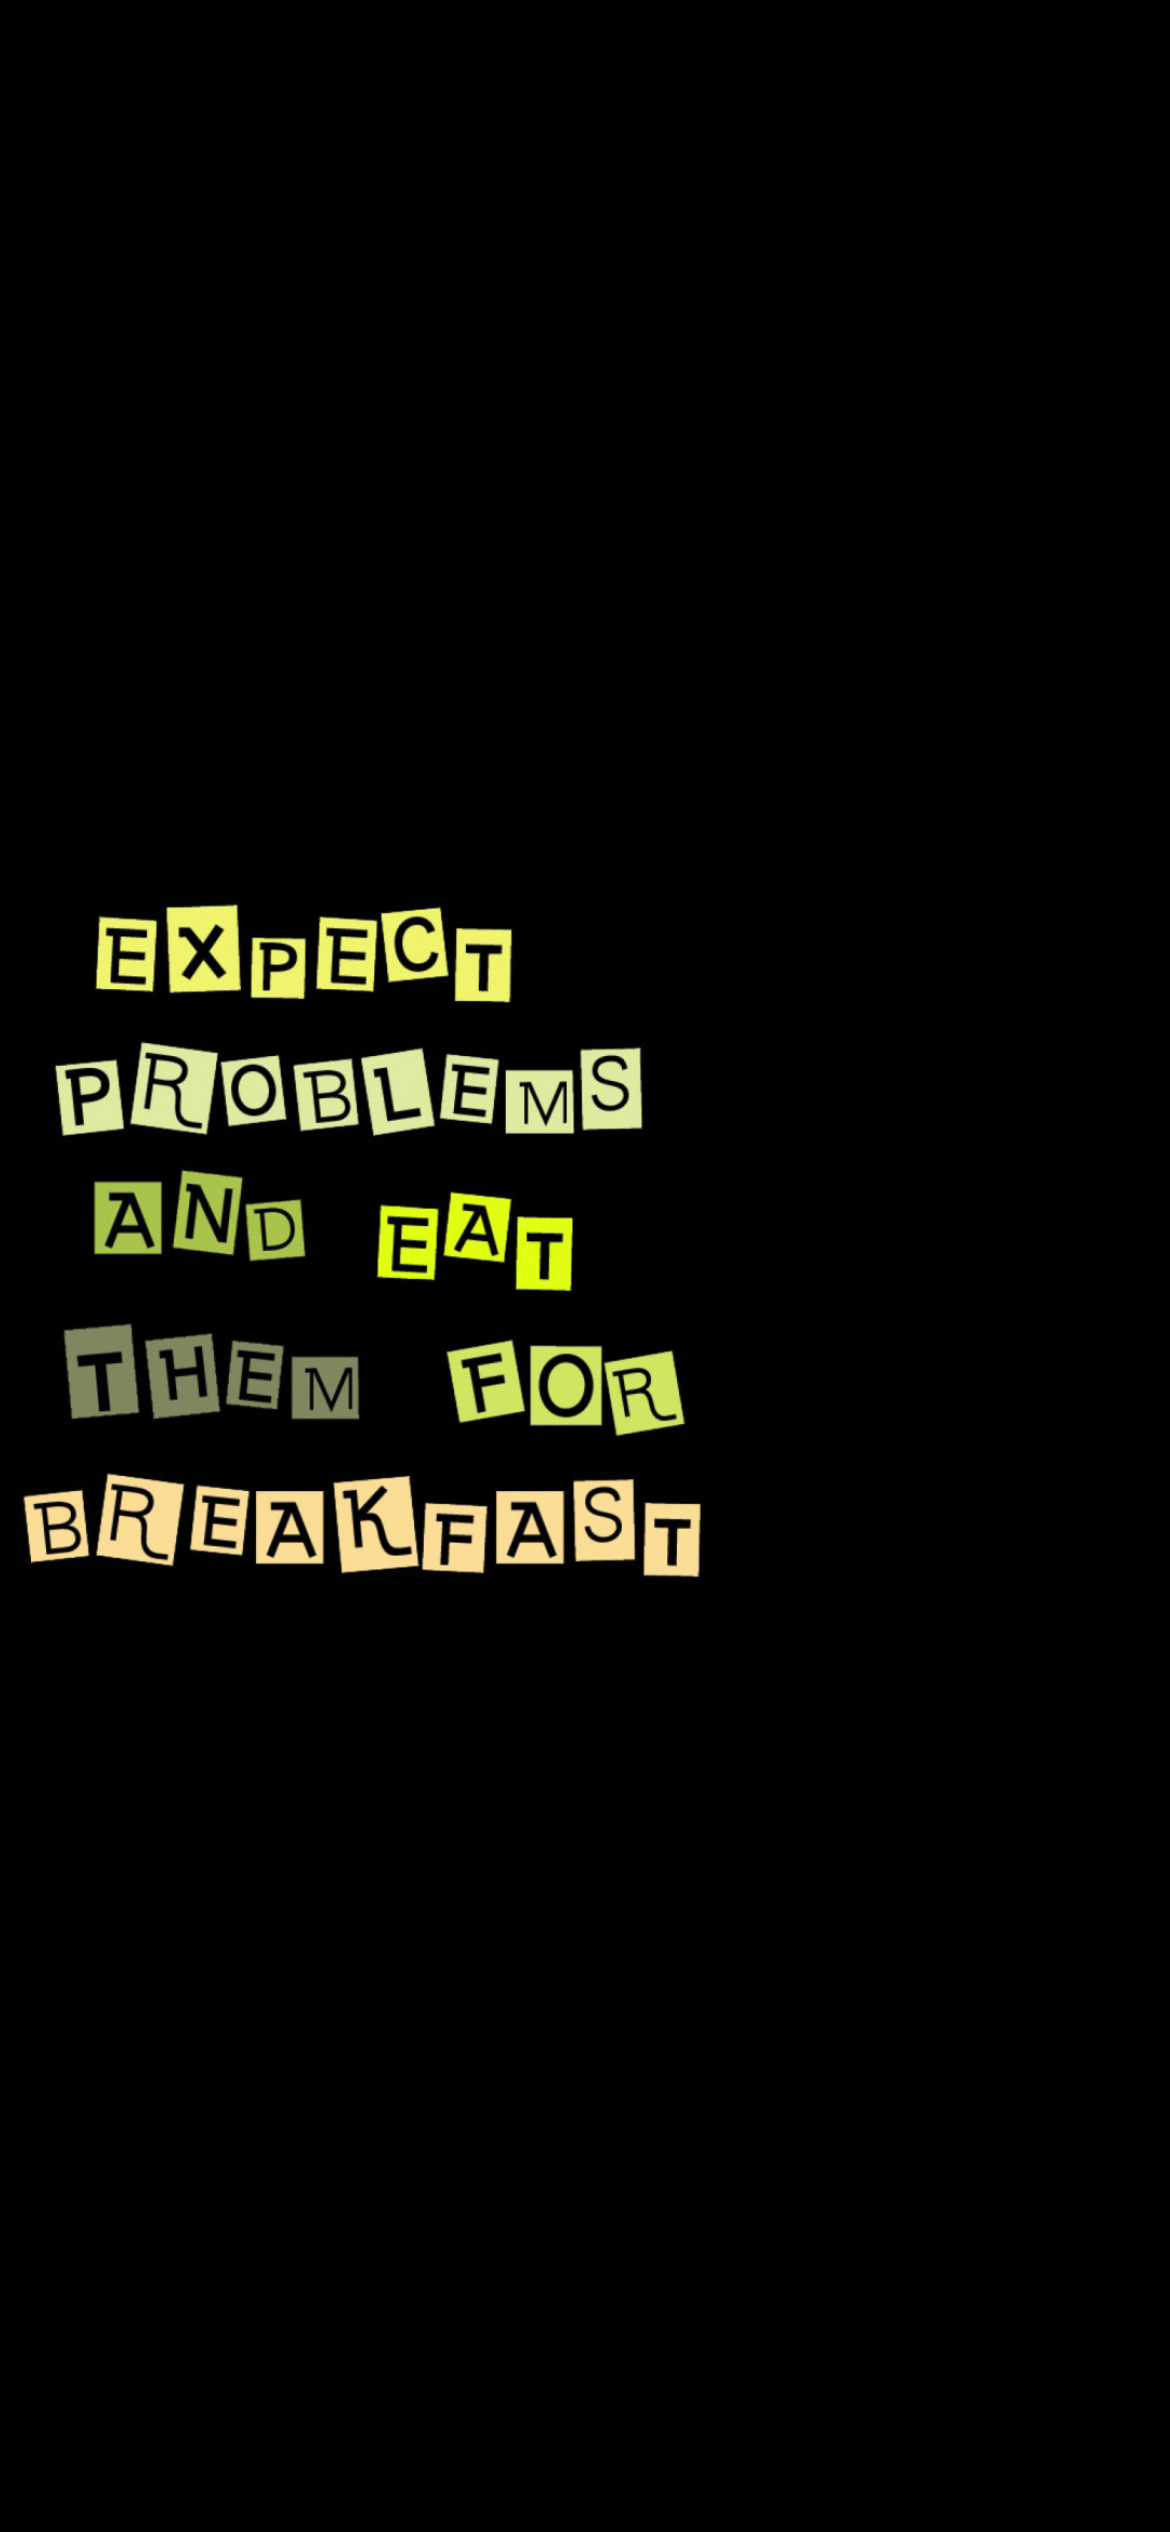 Problems For Breakfast wallpaper 1170x2532